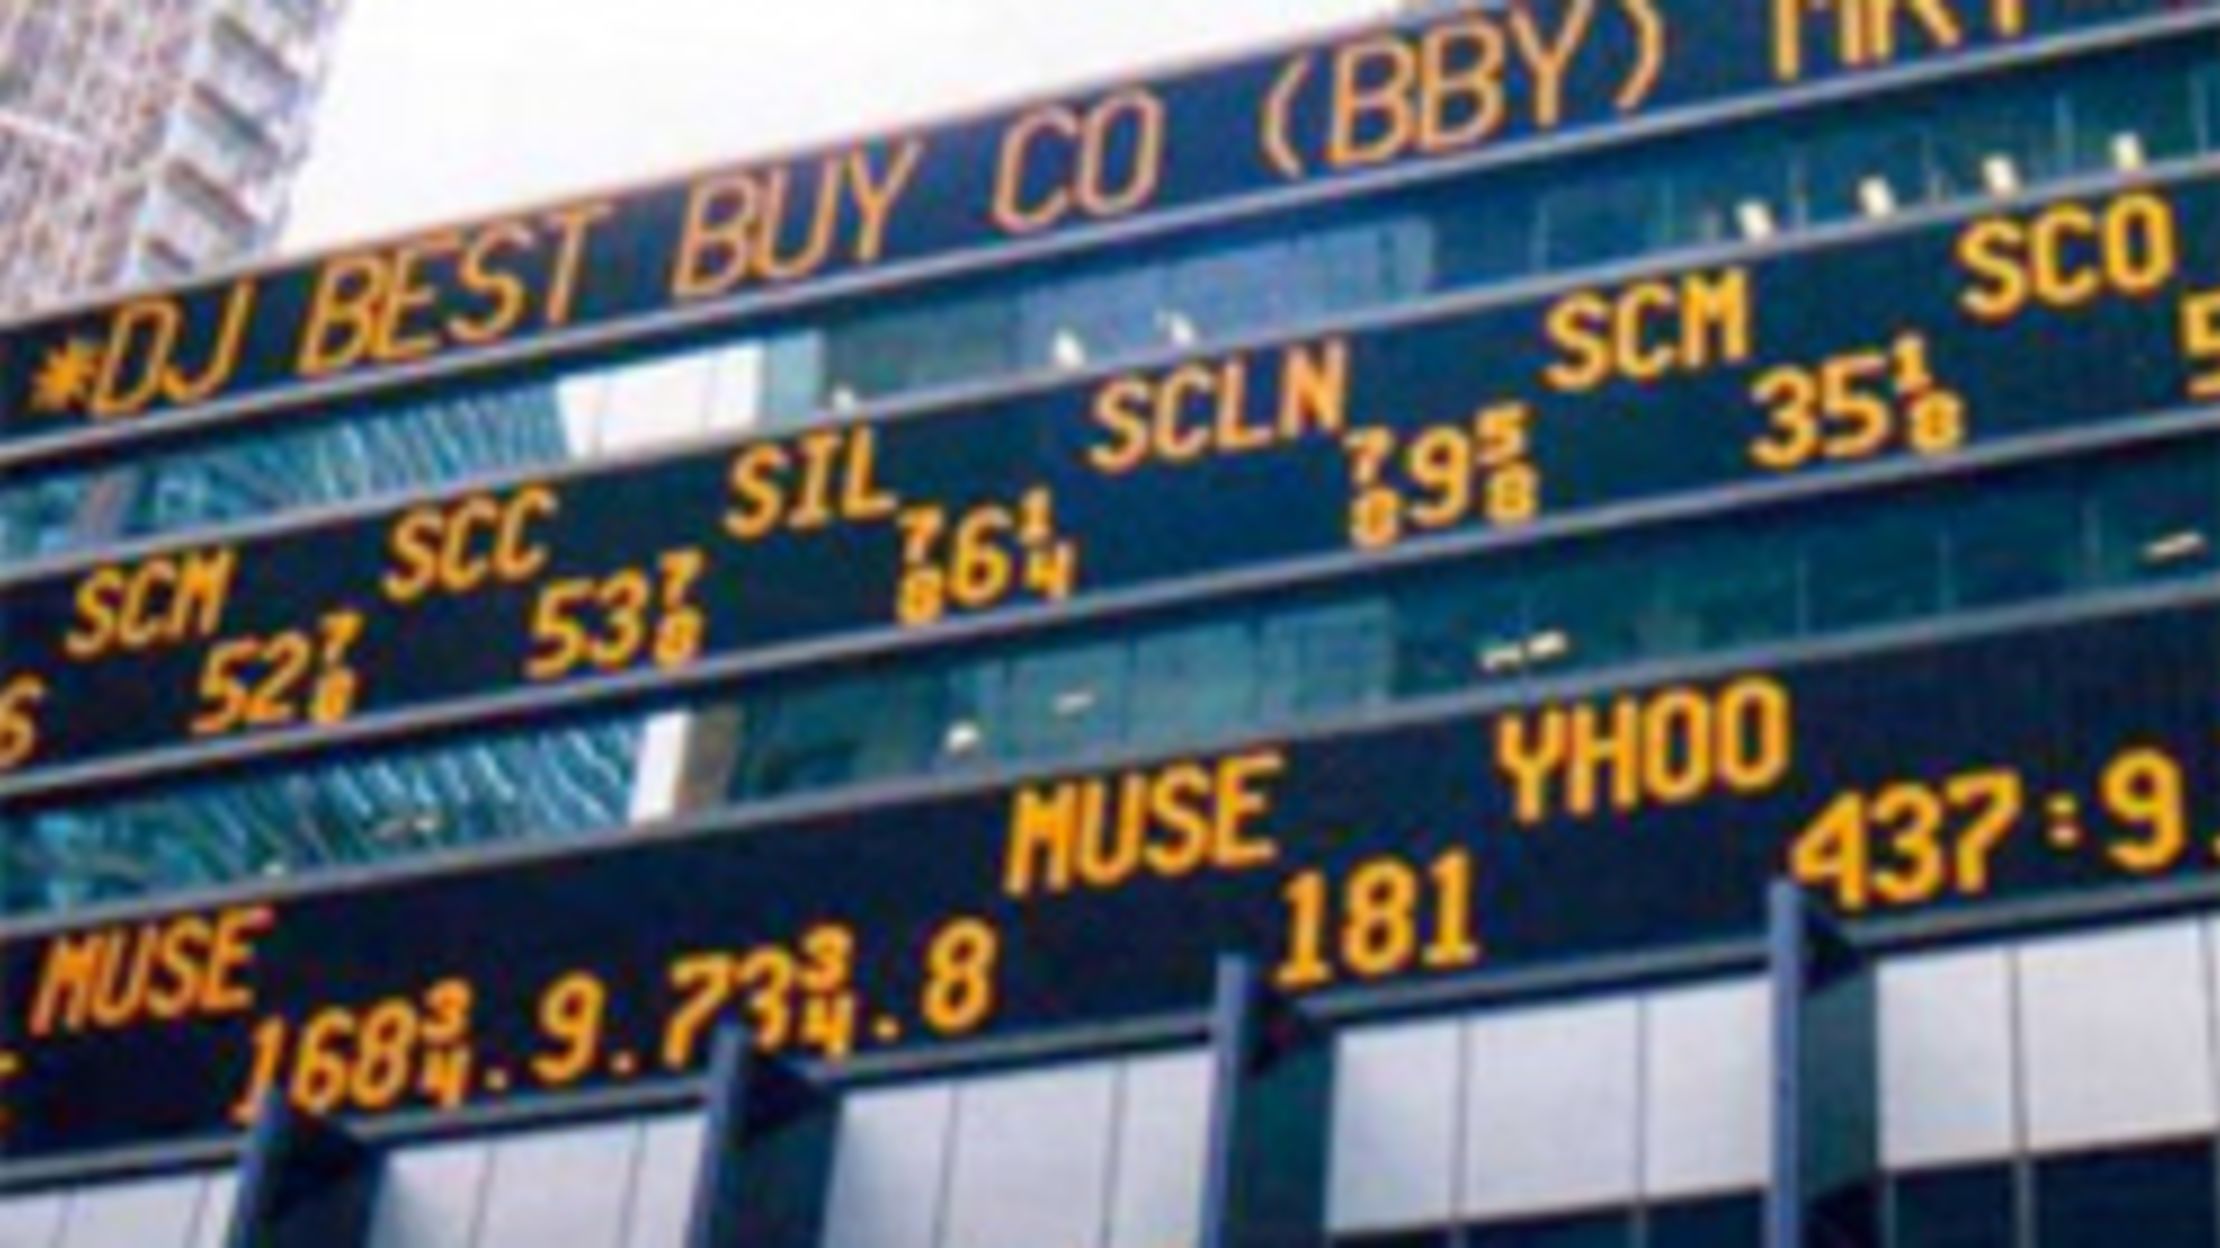 skype stock market symbol text